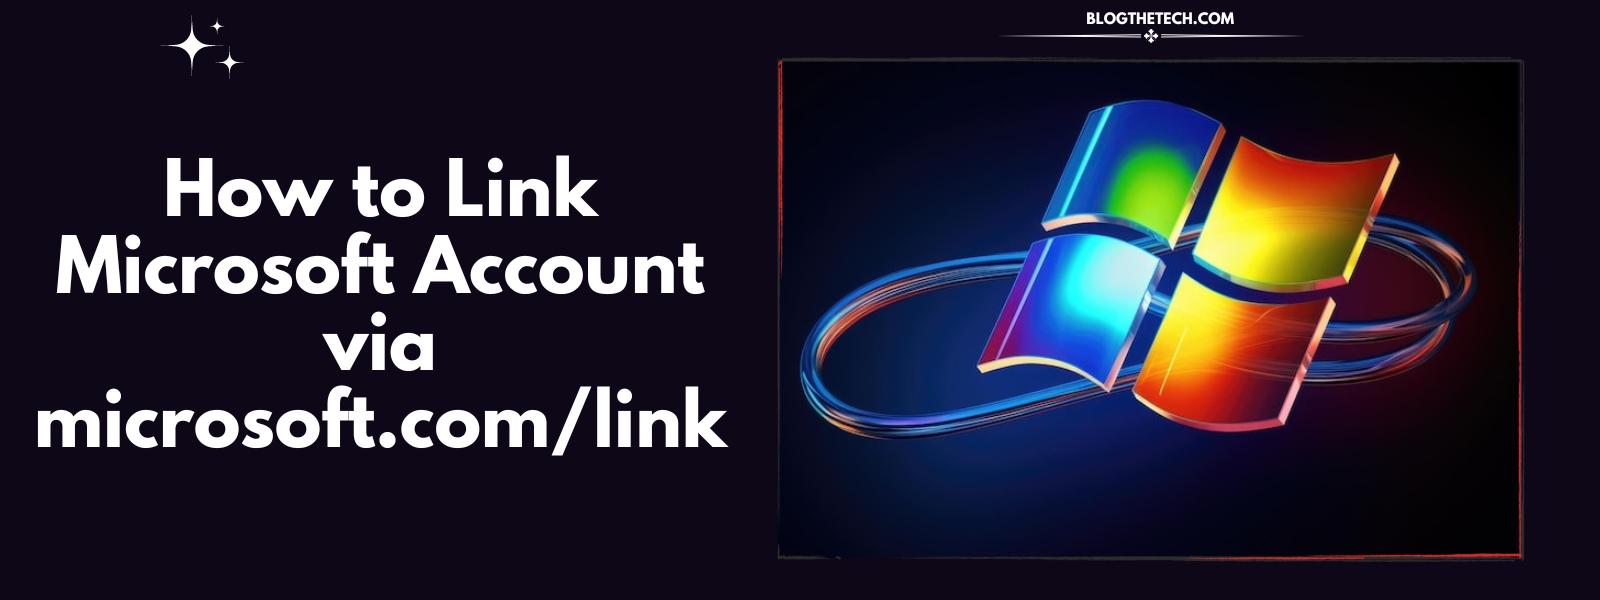 link-microsoft-account-via-microsoft-com-link-featured